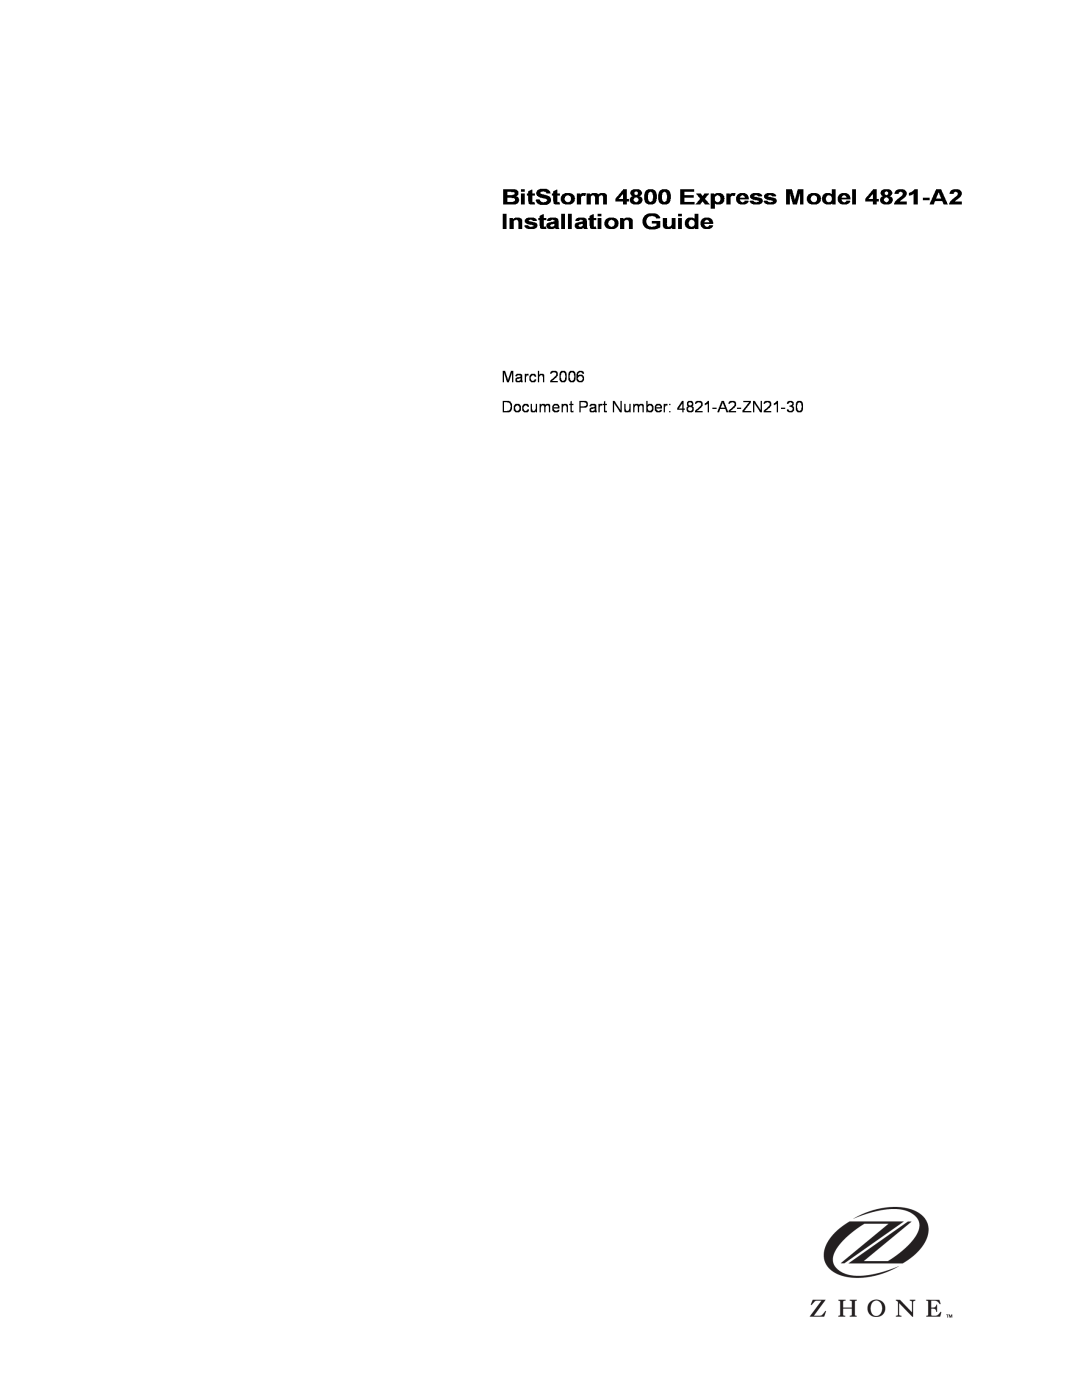 Zhone Technologies manual BitStorm 4800 Express Model 4821-A2 Installation Guide 